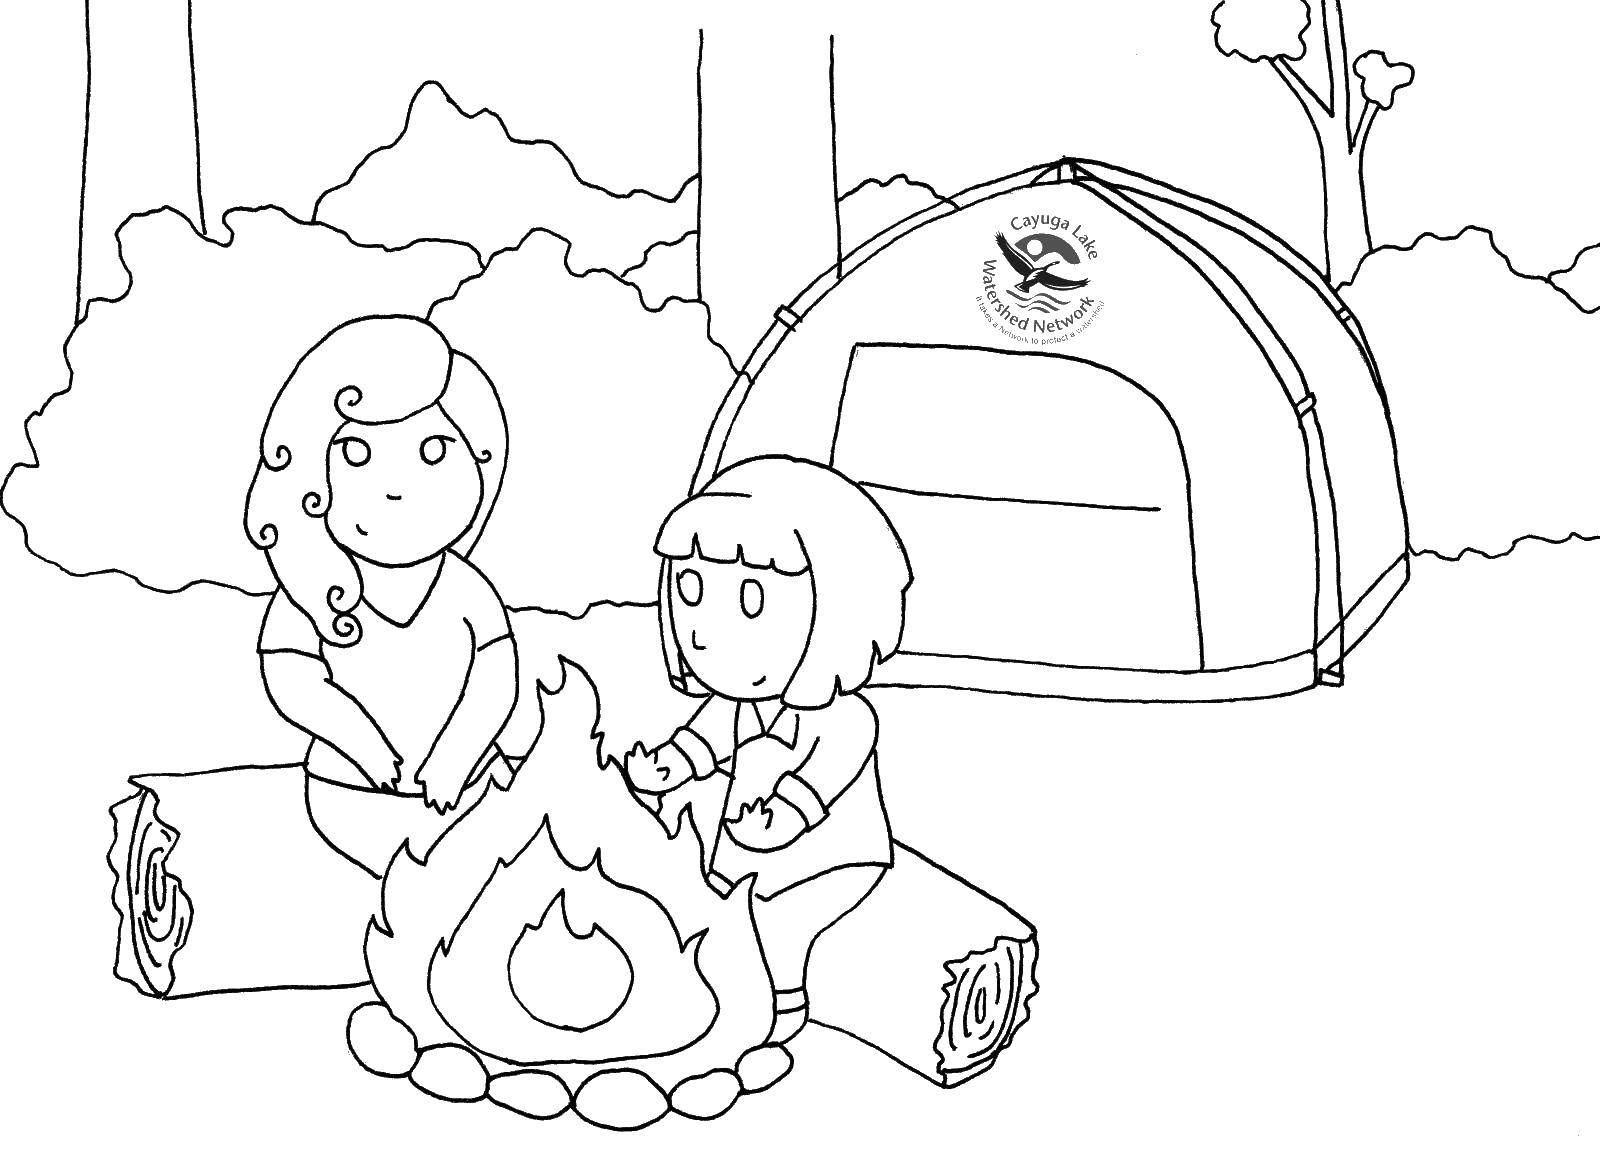 Название: Раскраска Мама и дочка у костра. Категория: Отдых на природе. Теги: мама, дочка, палатка, костер.